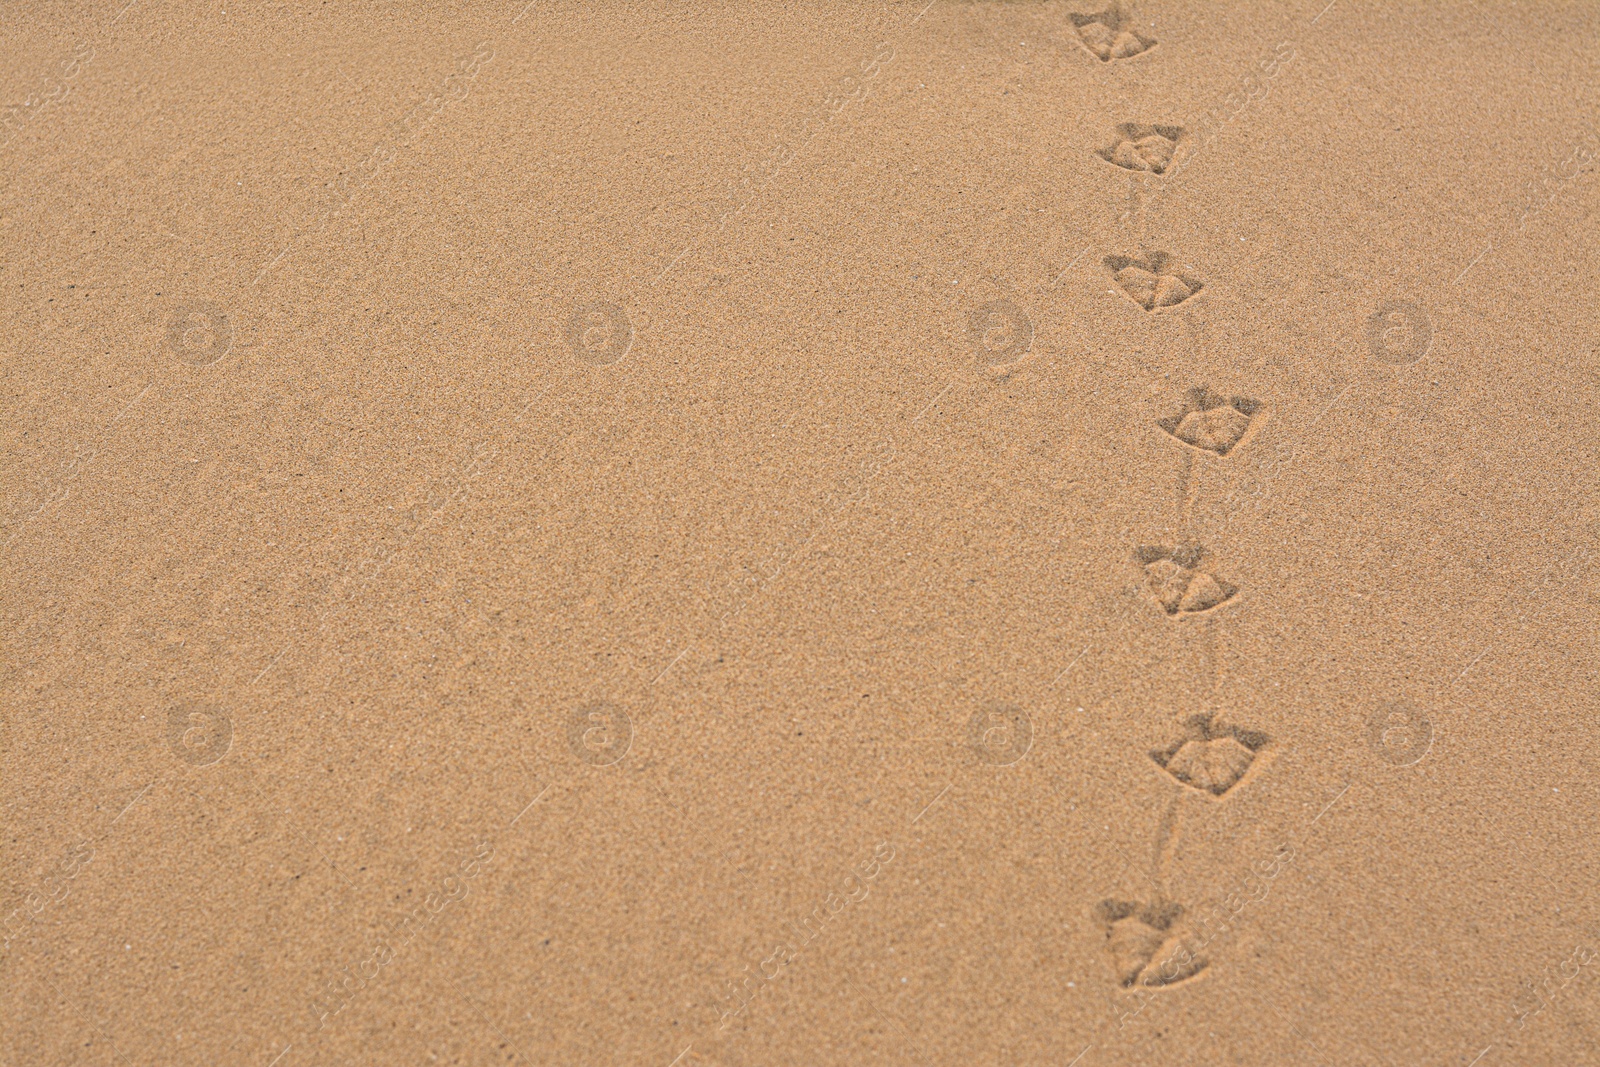 Photo of Bird tracks on beach sand. Space for text